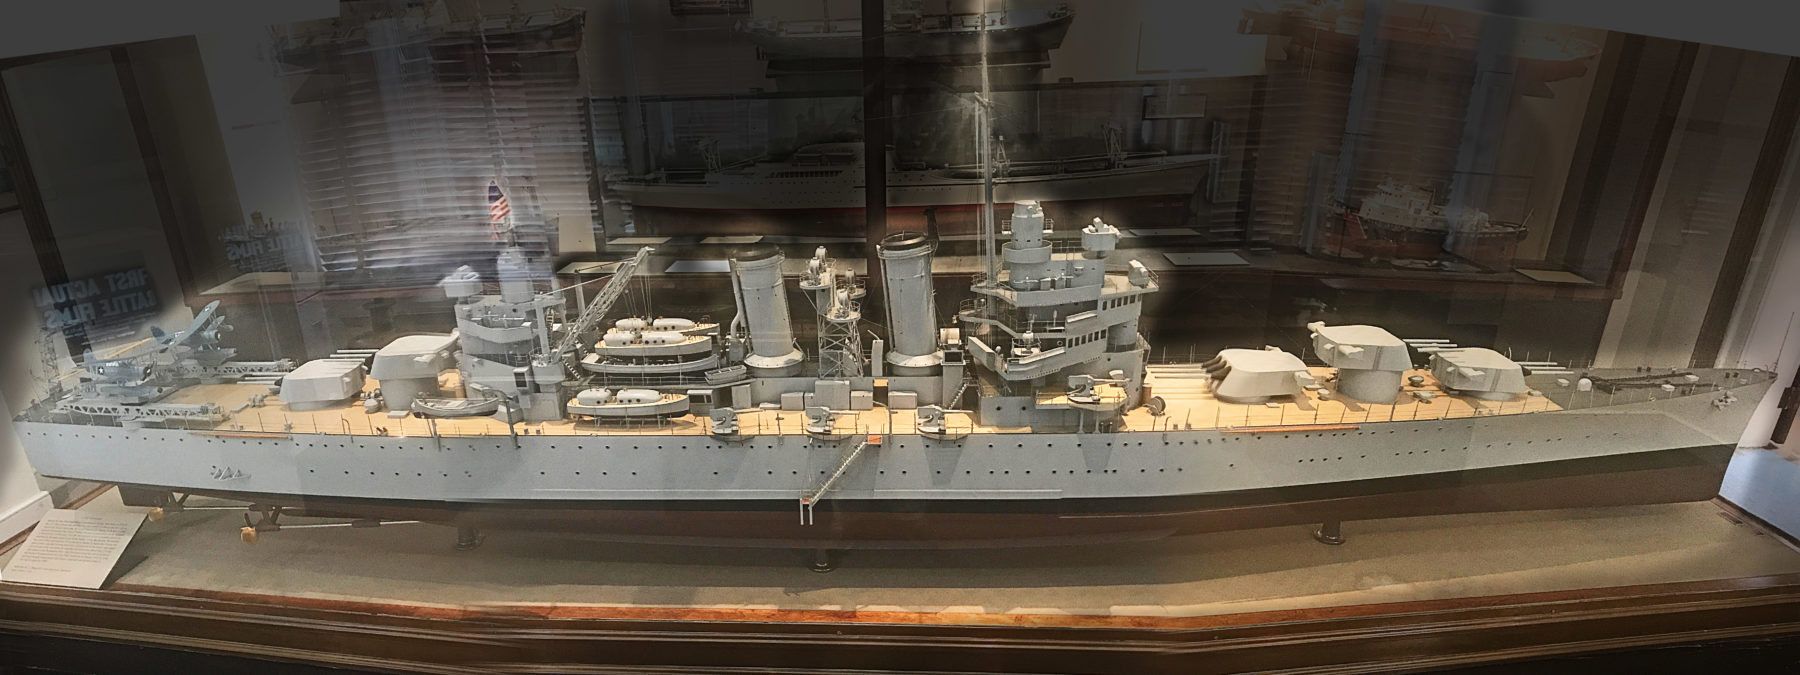 shipyard model of the Savannah